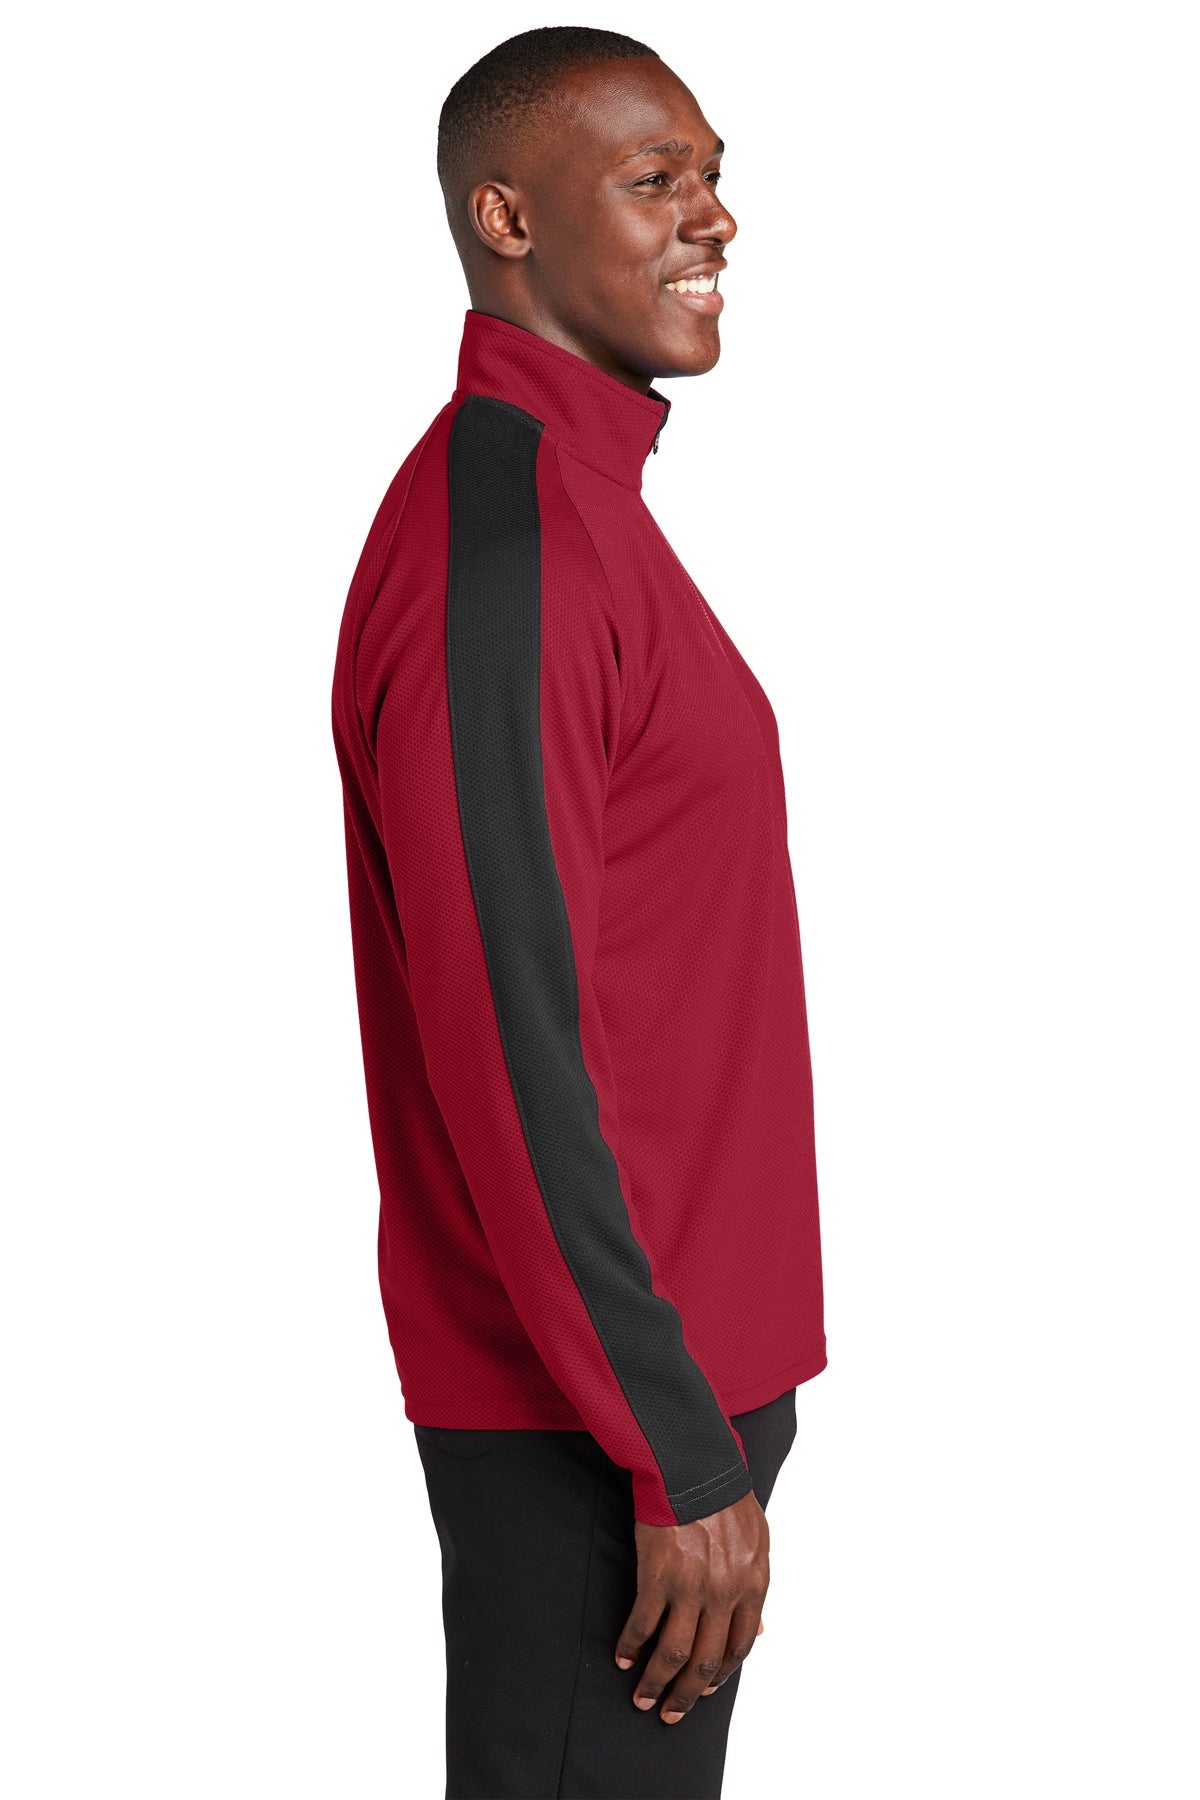 sport-tek_st861 _deep red/ black_company_logo_sweatshirts